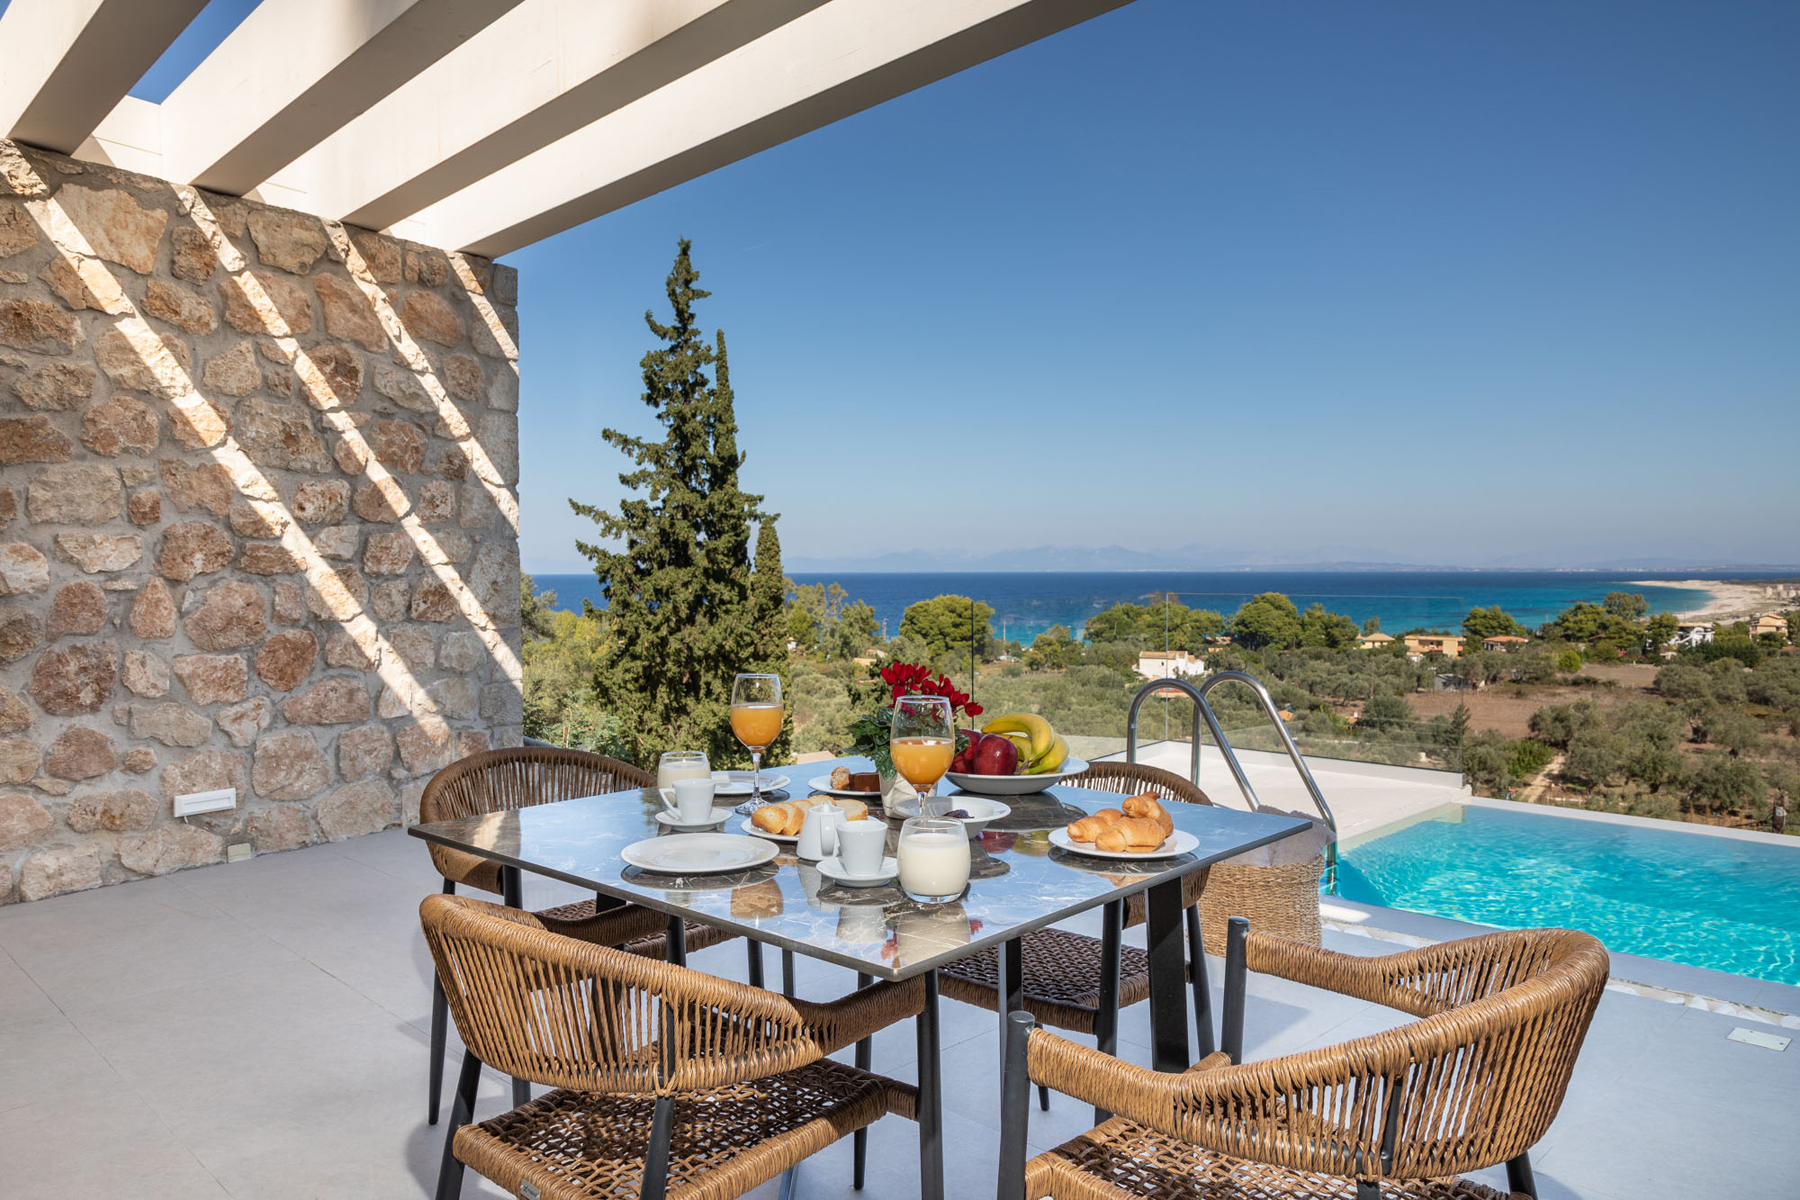 z luxury villa lefkada greece table chairs breakfast swimming pool sea view trees